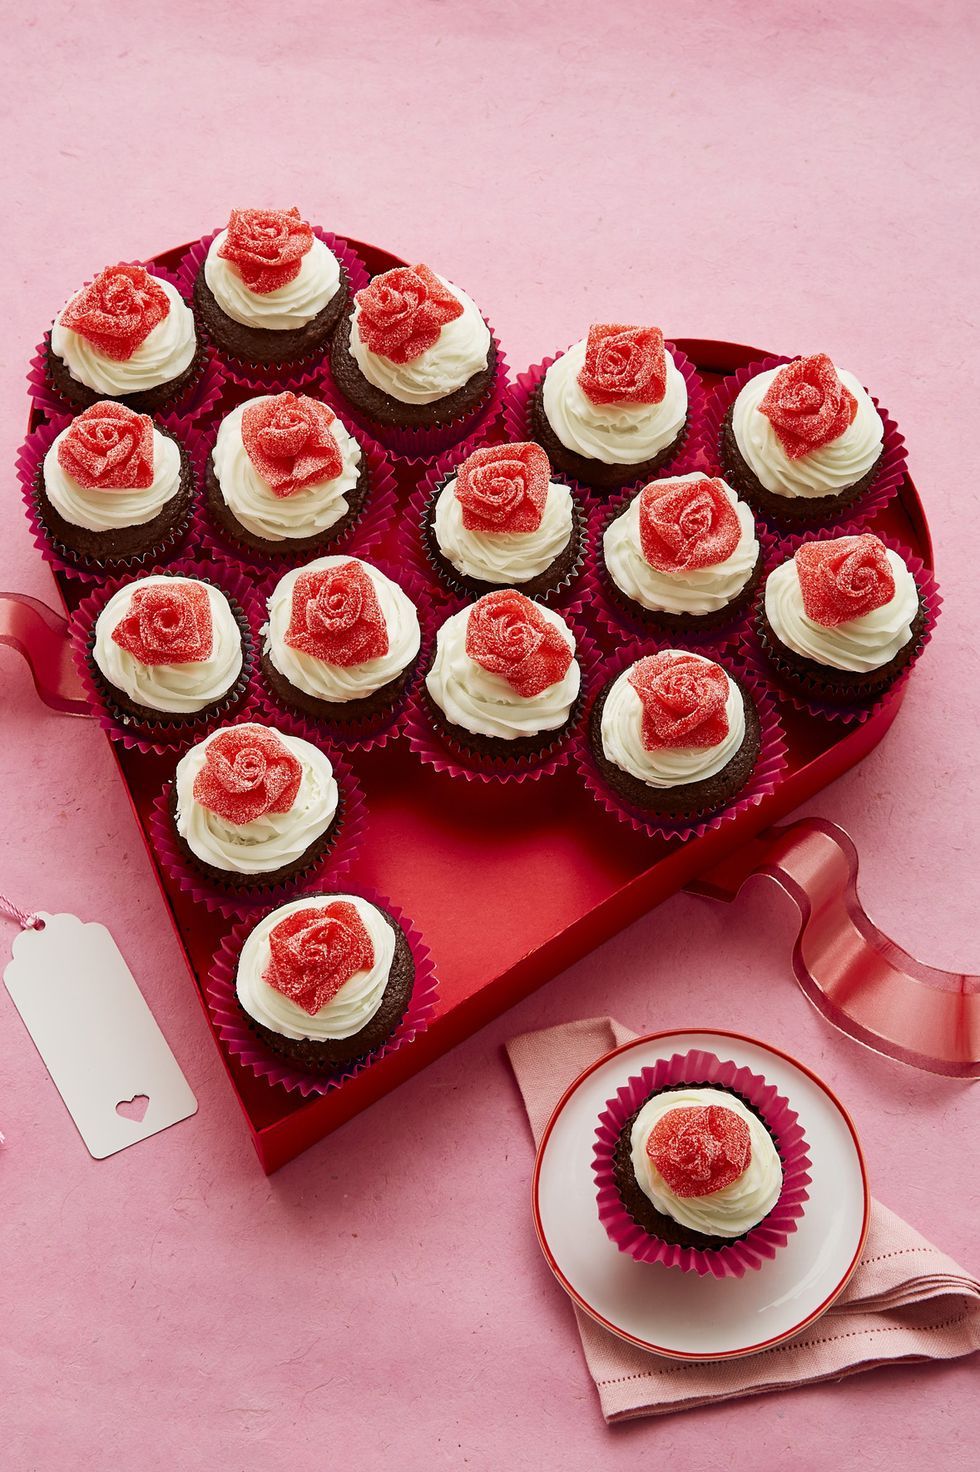 55+ Best Valentine's Day Cakes & Cupcakes - Easy Valentine's Day ...